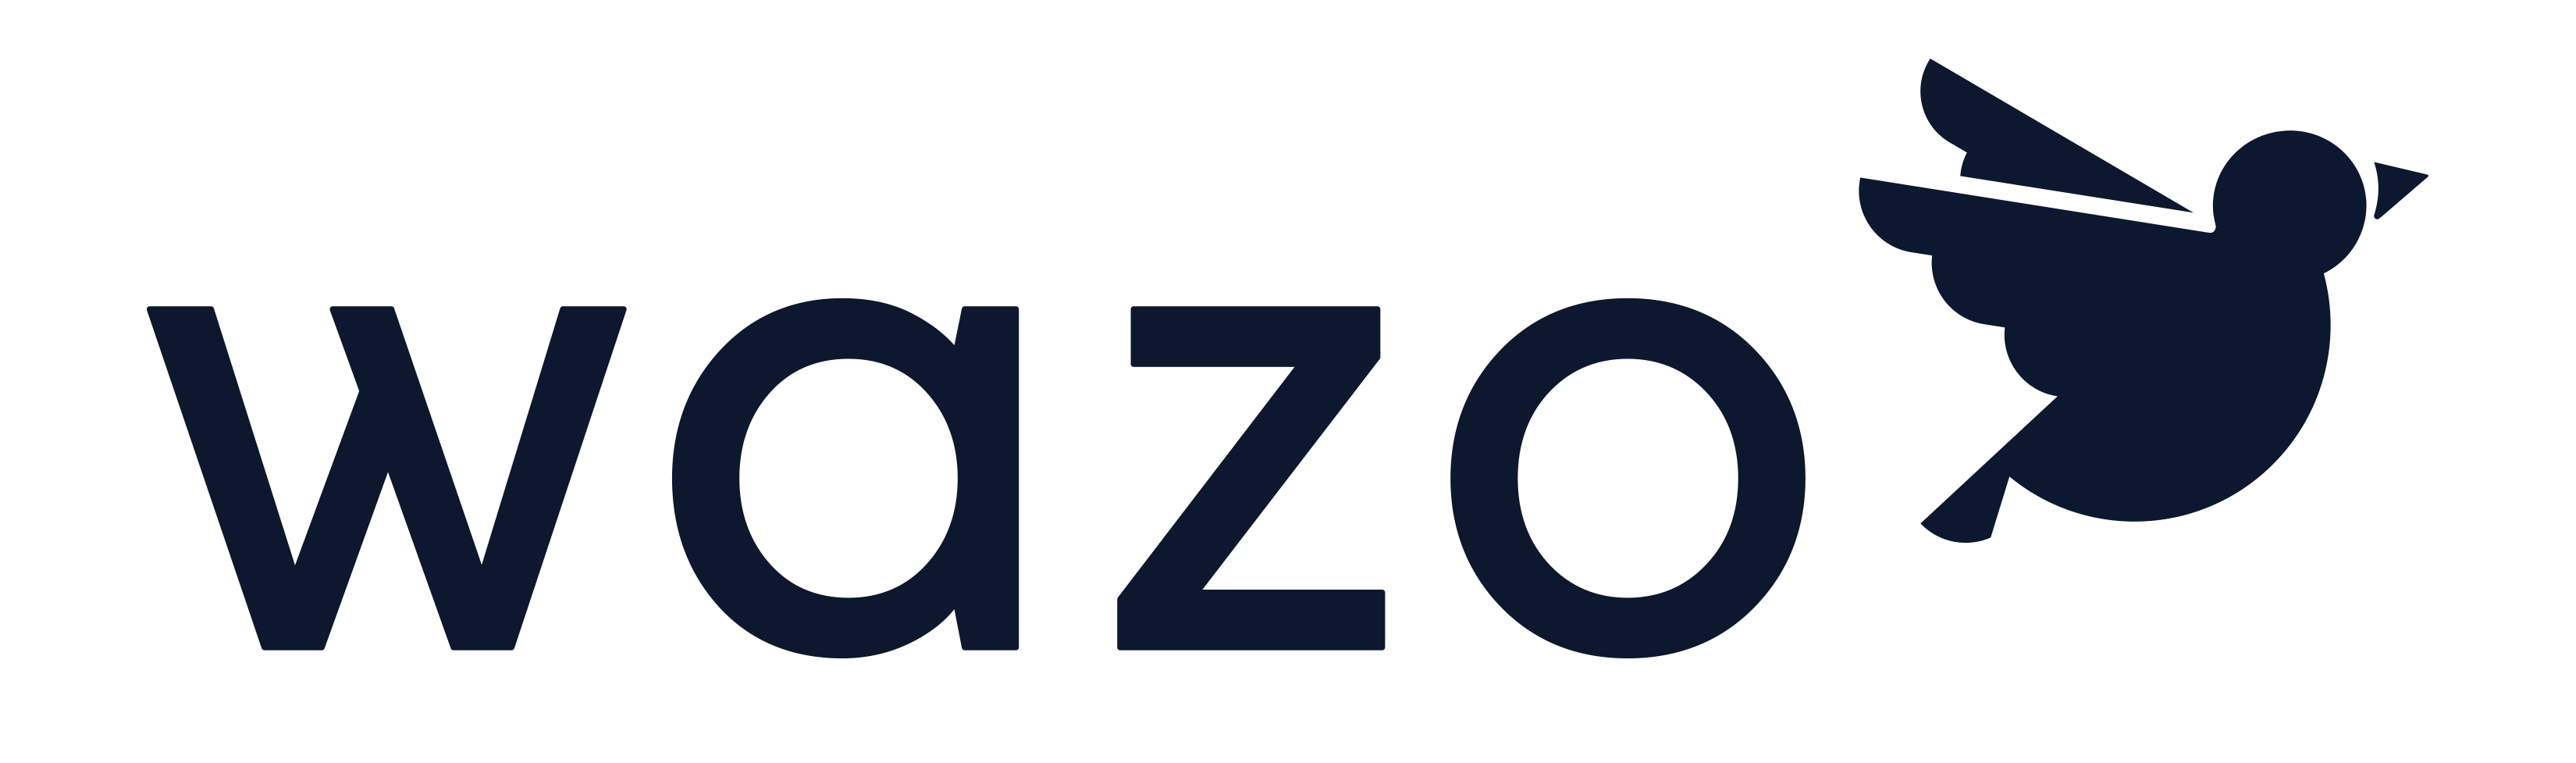 Wazo logo